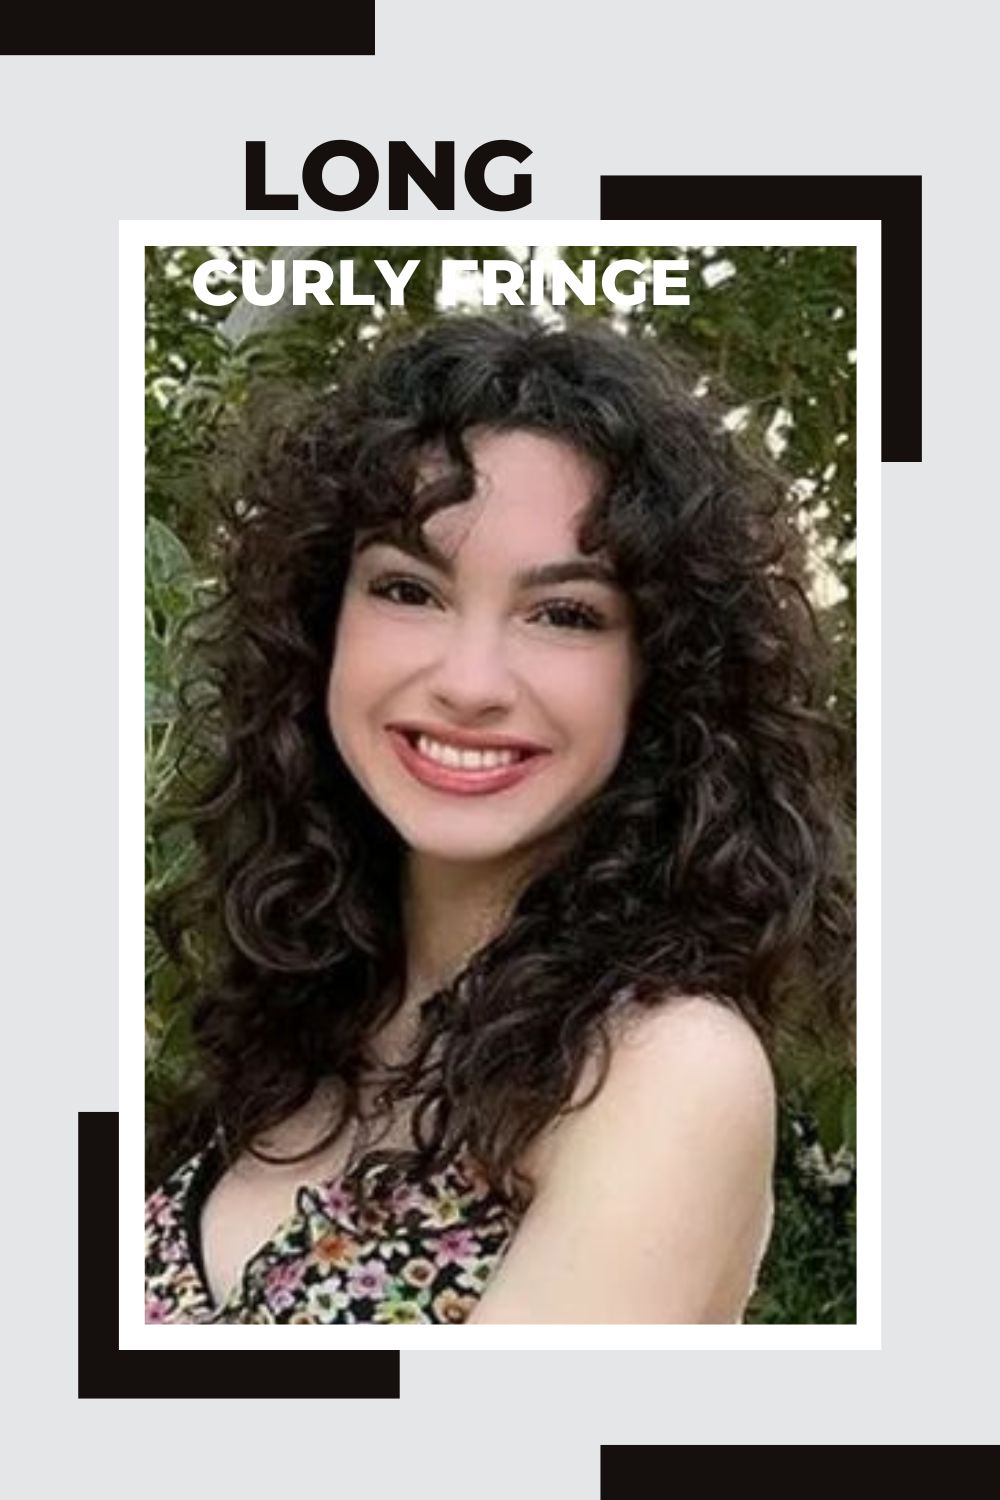 Long Curly Fringe Haircut